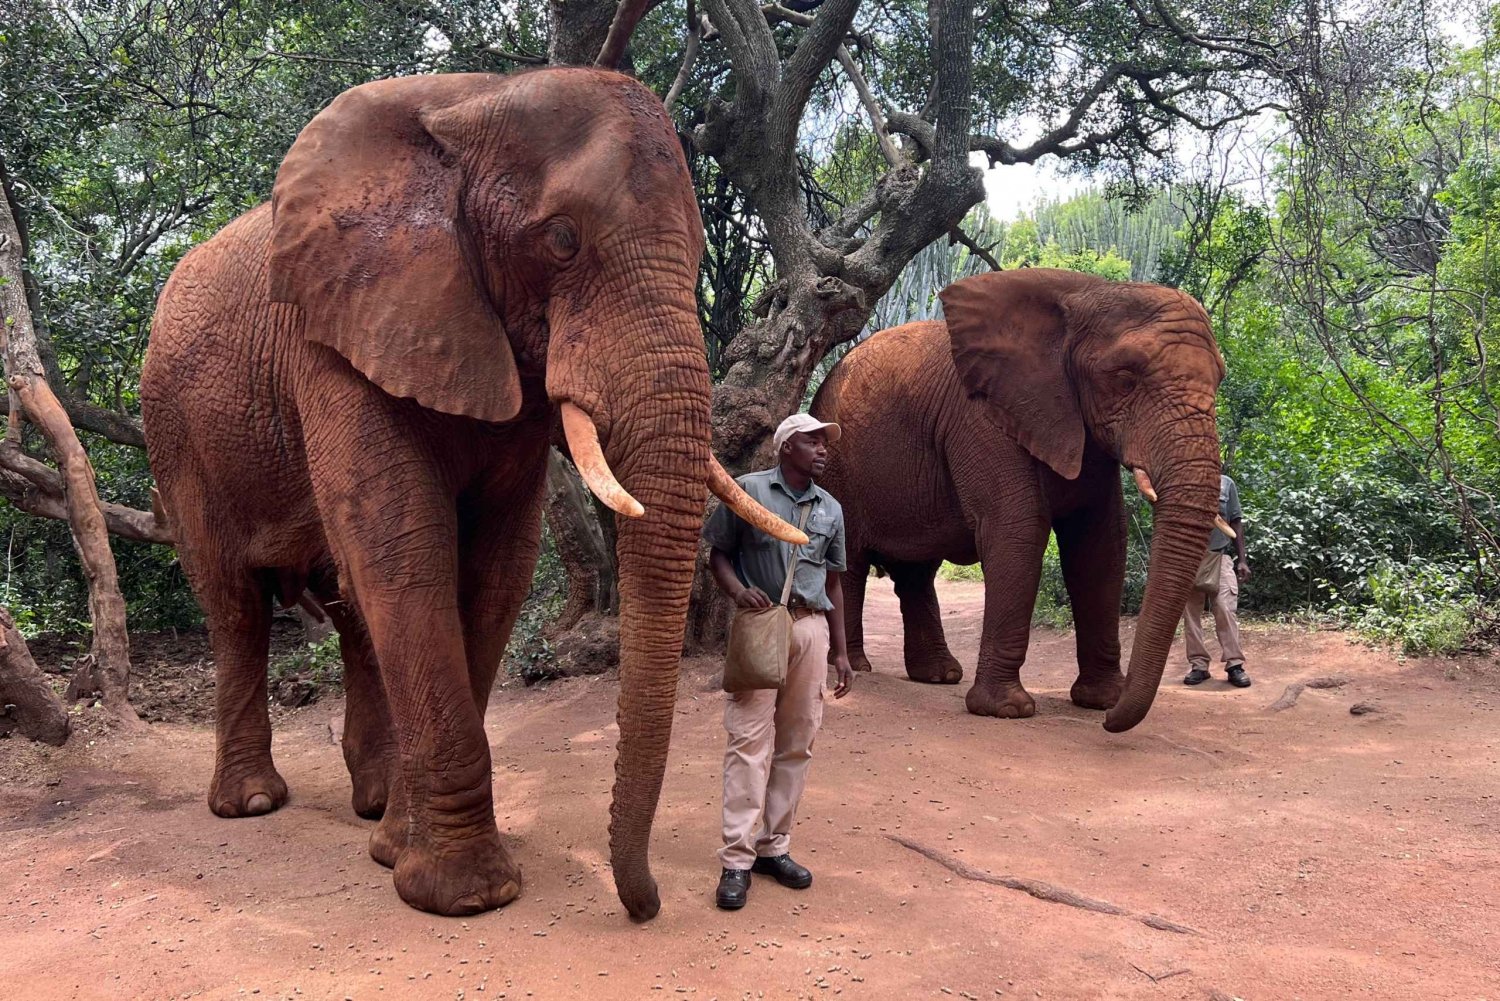 Private Johannesburg Elephant & Monkey Sanctuary Half Day